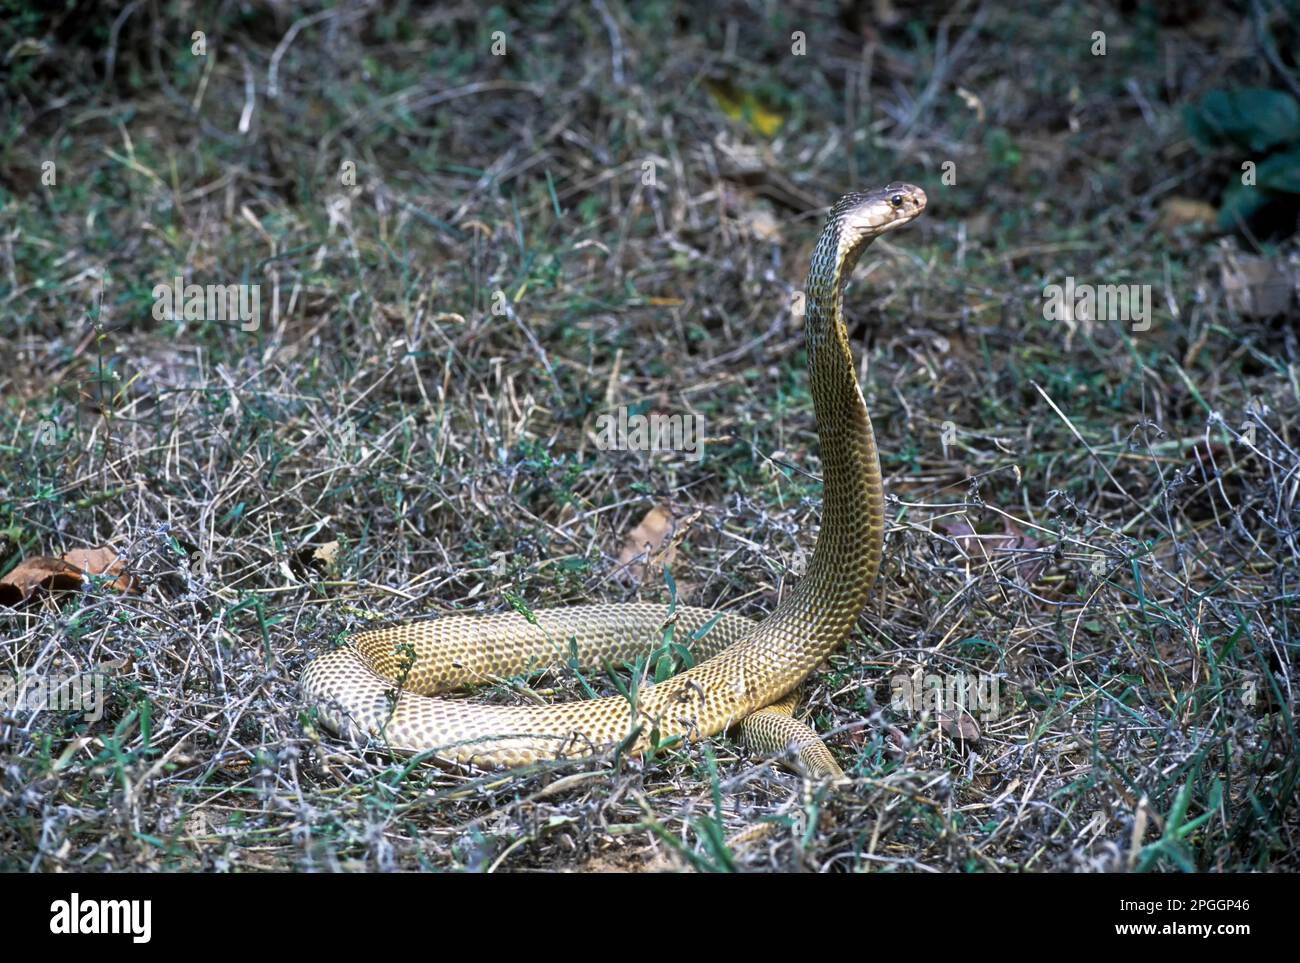 Cobra indien (Naja kaouthia) Tamil Nadu, Inde, Asie Banque D'Images